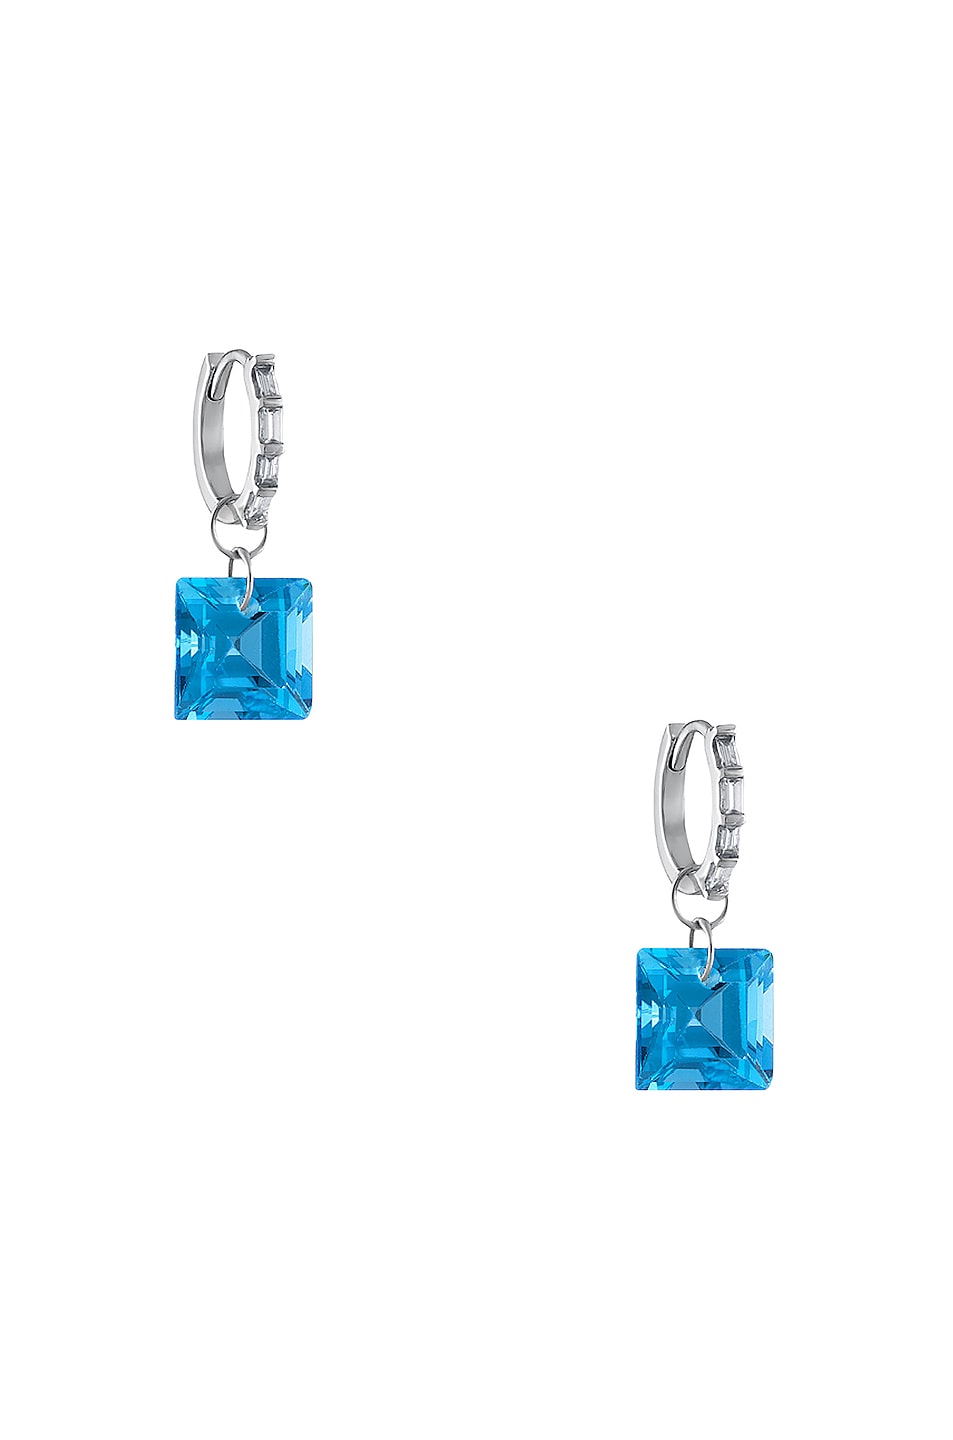 Image 1 of ILENE JOY x Elizabeth Sulcer Phyllis Setless Charm Earrings in Blue Topaz, Diamonds, &18K Gold